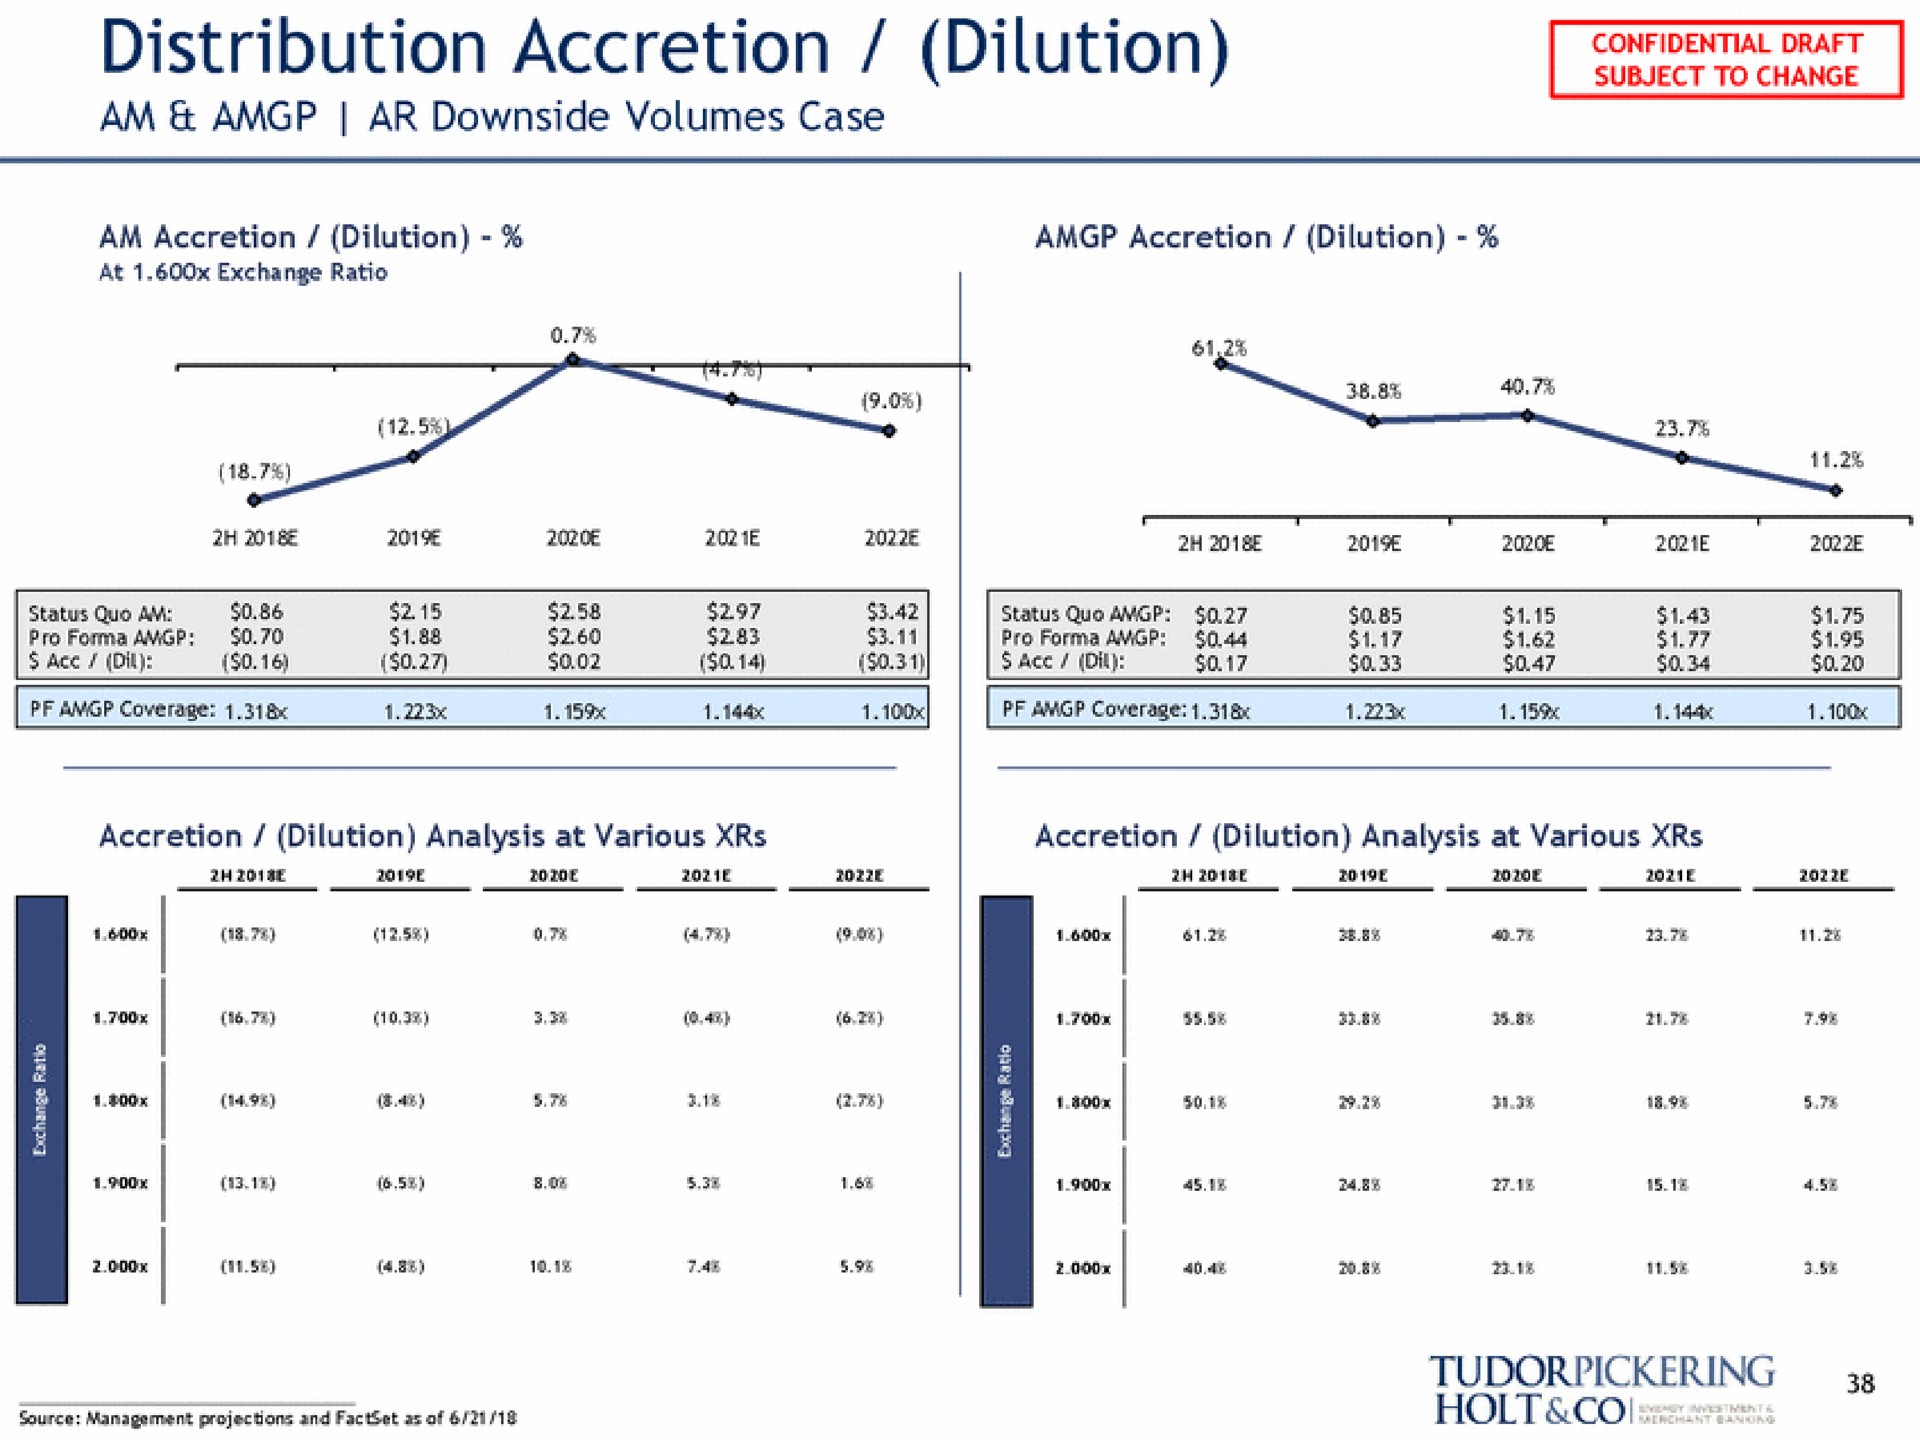 distribution accretion dilution | Tudor, Pickering, Holt & Co